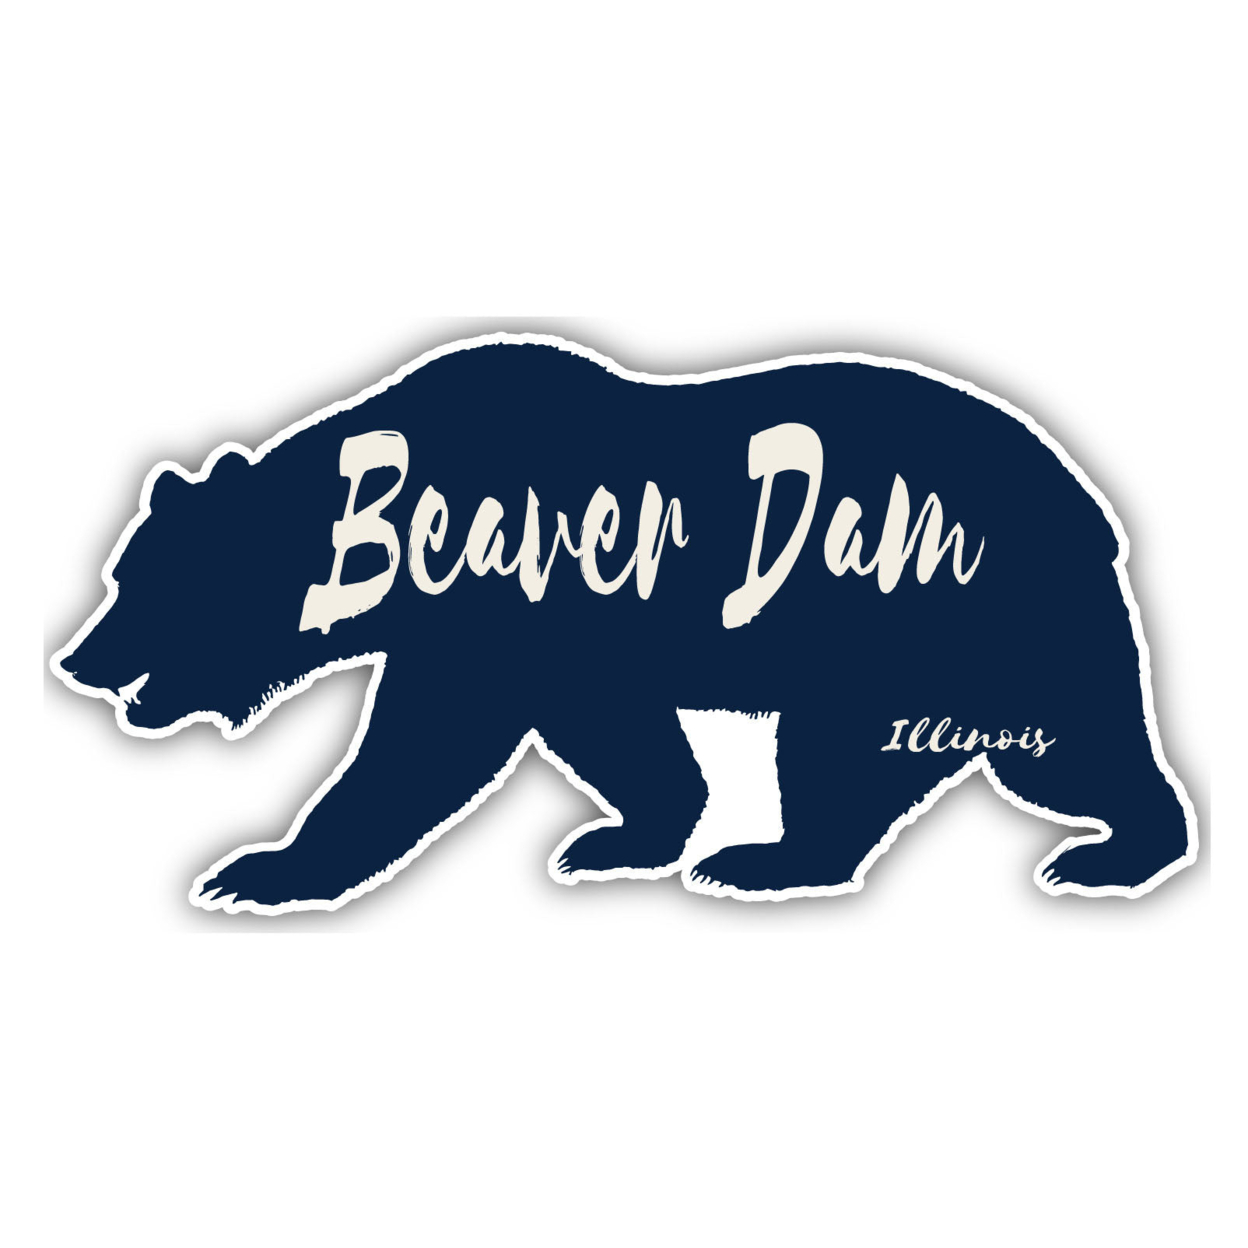 Beaver Dam Illinois Souvenir Decorative Stickers (Choose Theme And Size) - Single Unit, 6-Inch, Bear